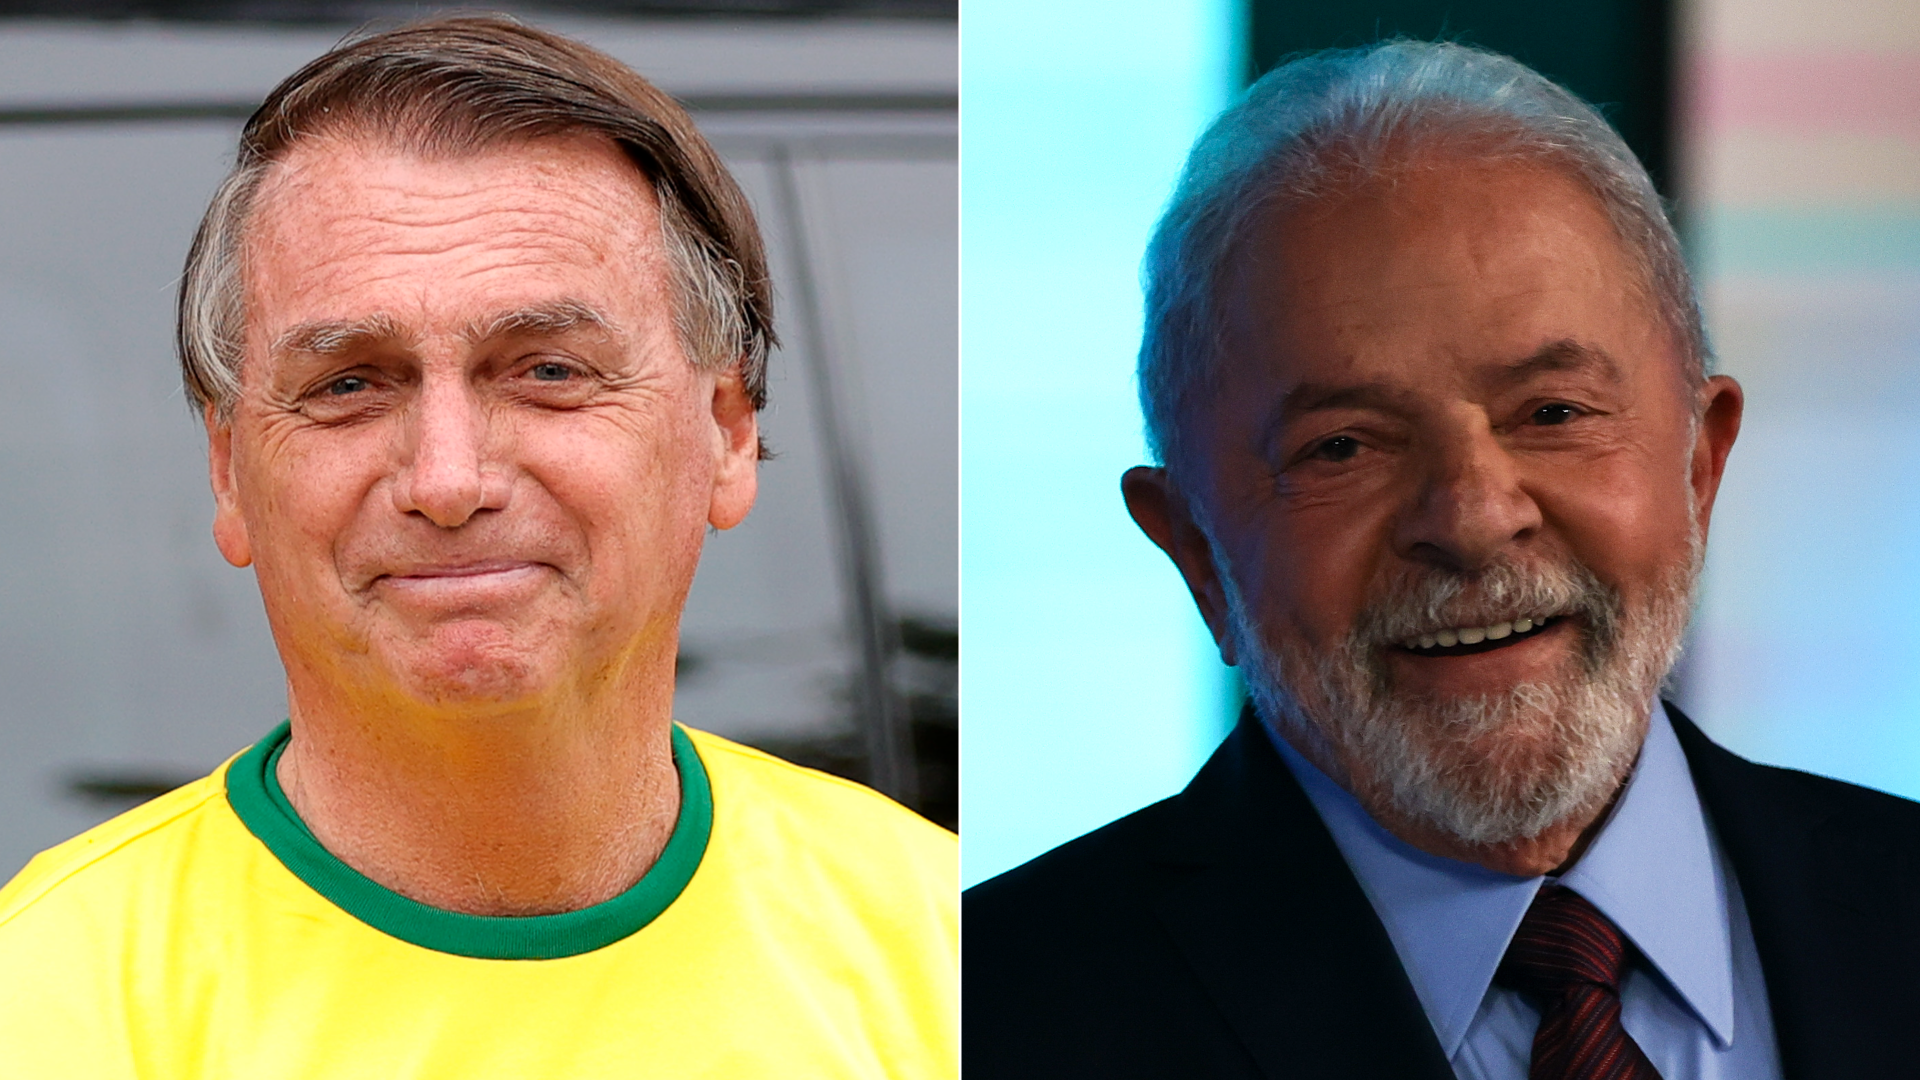 Side-by-side photos of Bolsonaro and Lula.